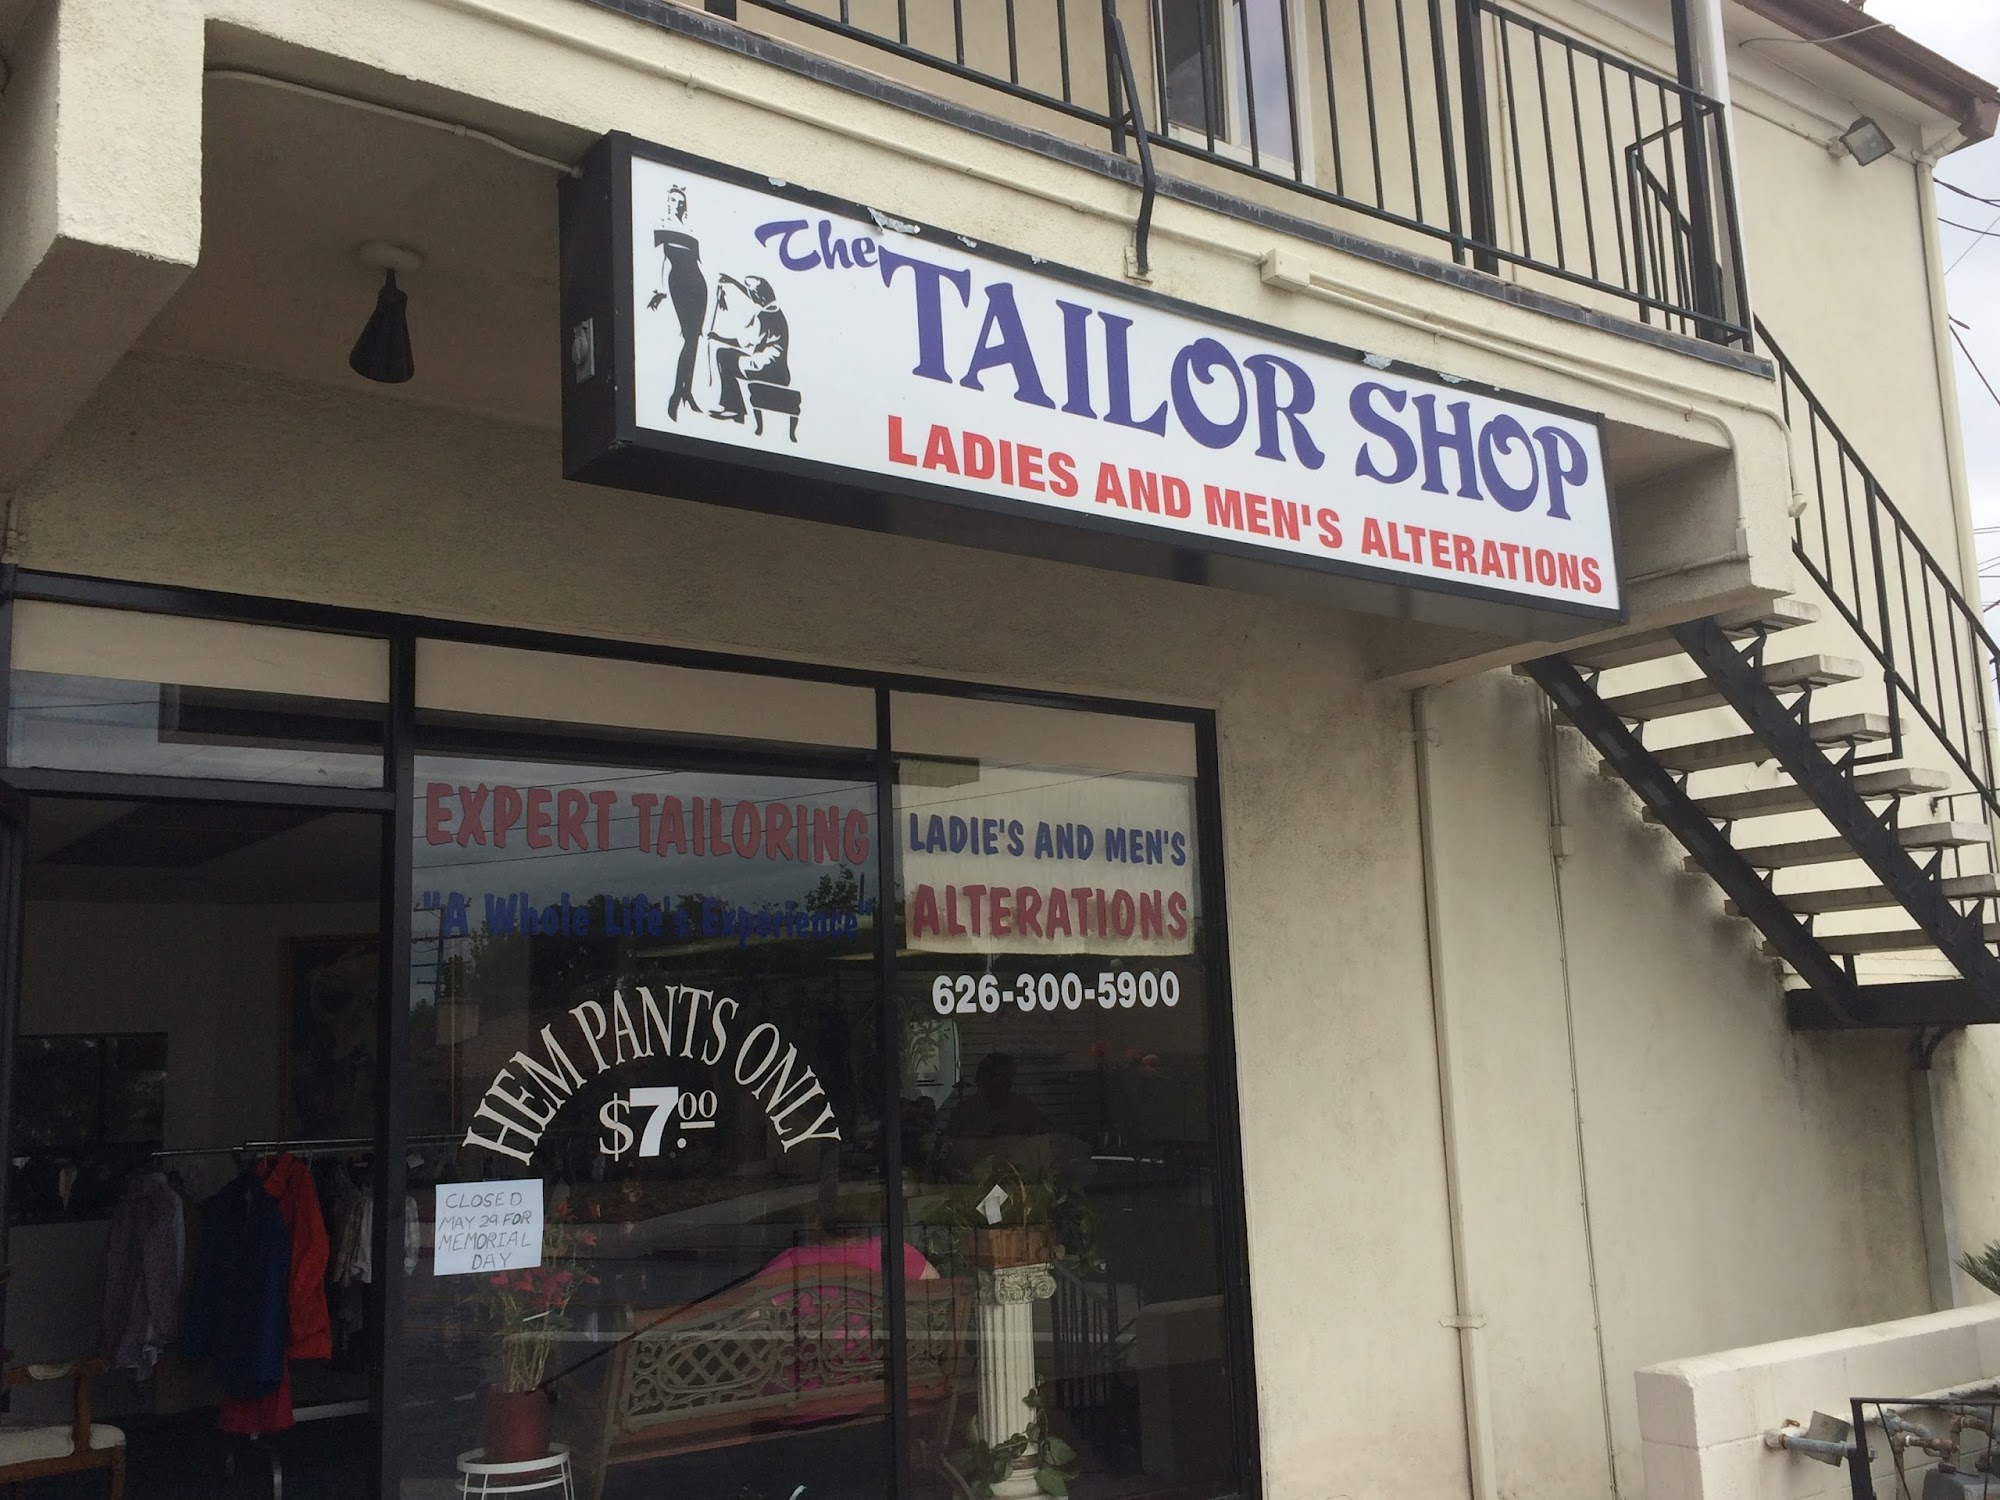 The Tailor Shop